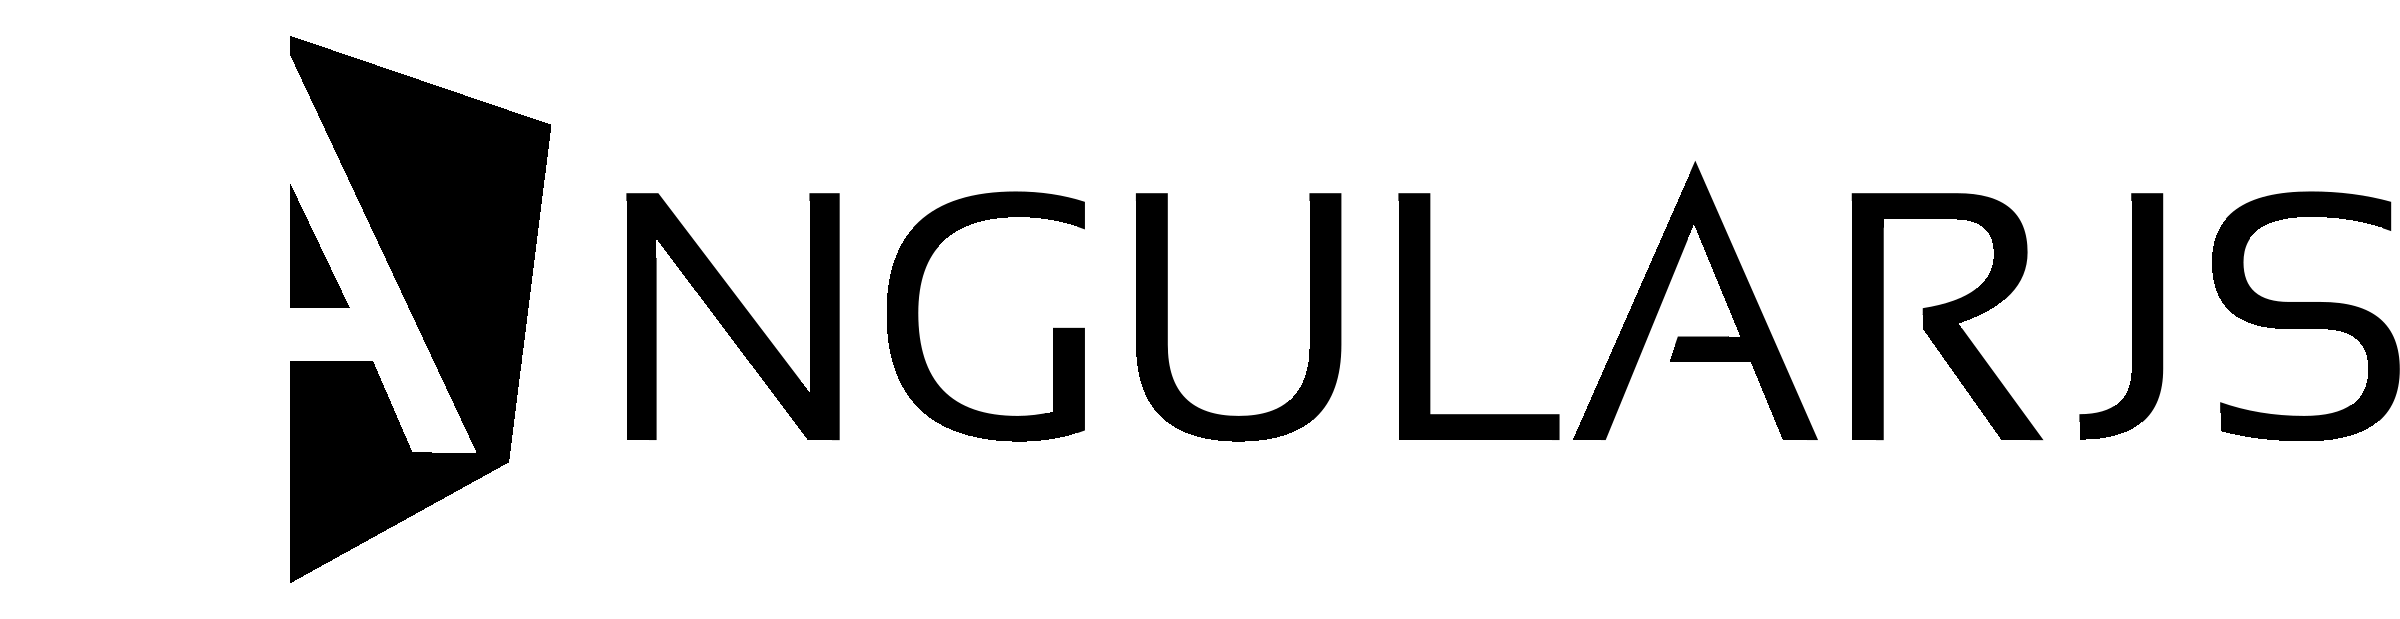 Angular Logo - Angular Logo PNG Transparent & SVG Vector - Freebie Supply